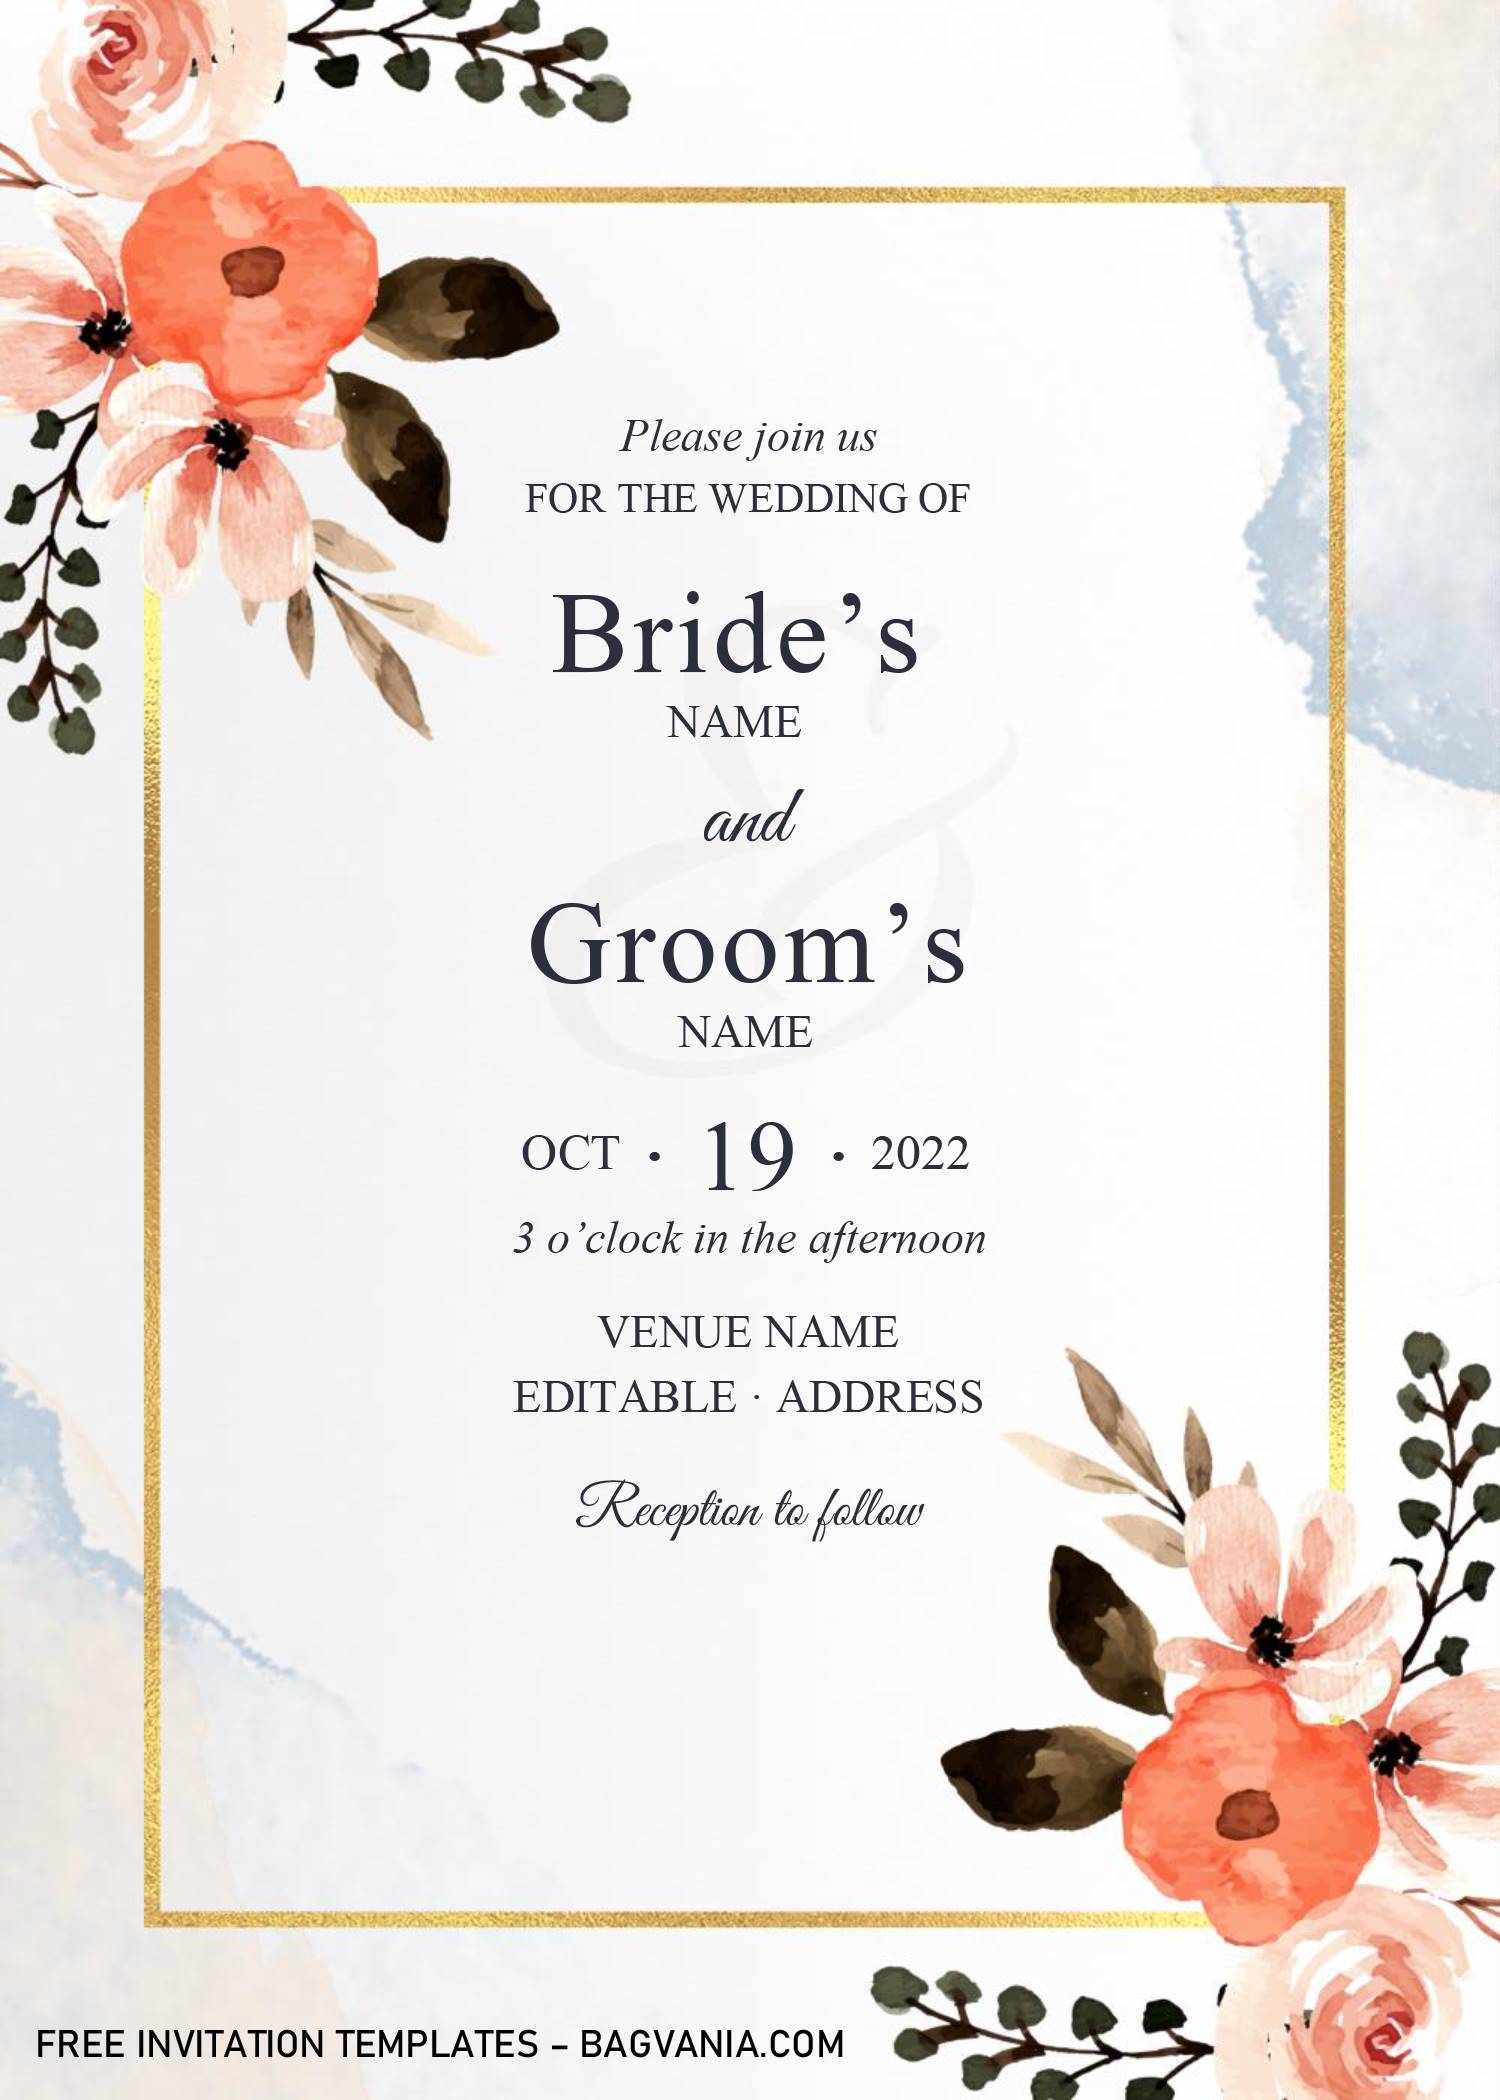 golden frame wedding invitation templates – editable with